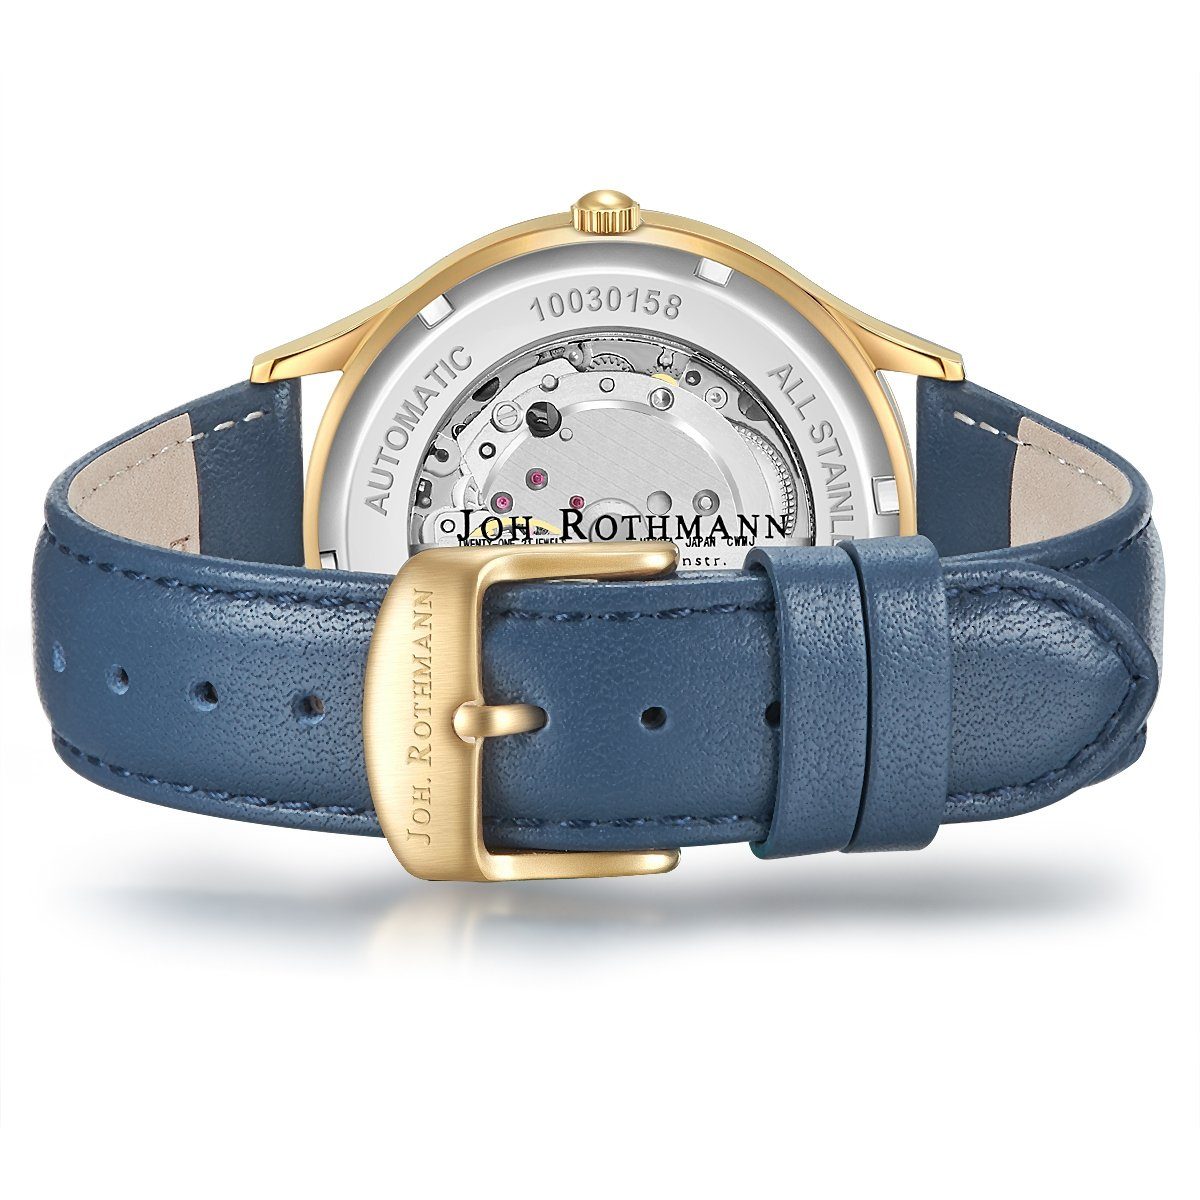 Joh. Rothmann I. Modern Echtleder-Armband Automatikuhr blau, Mit